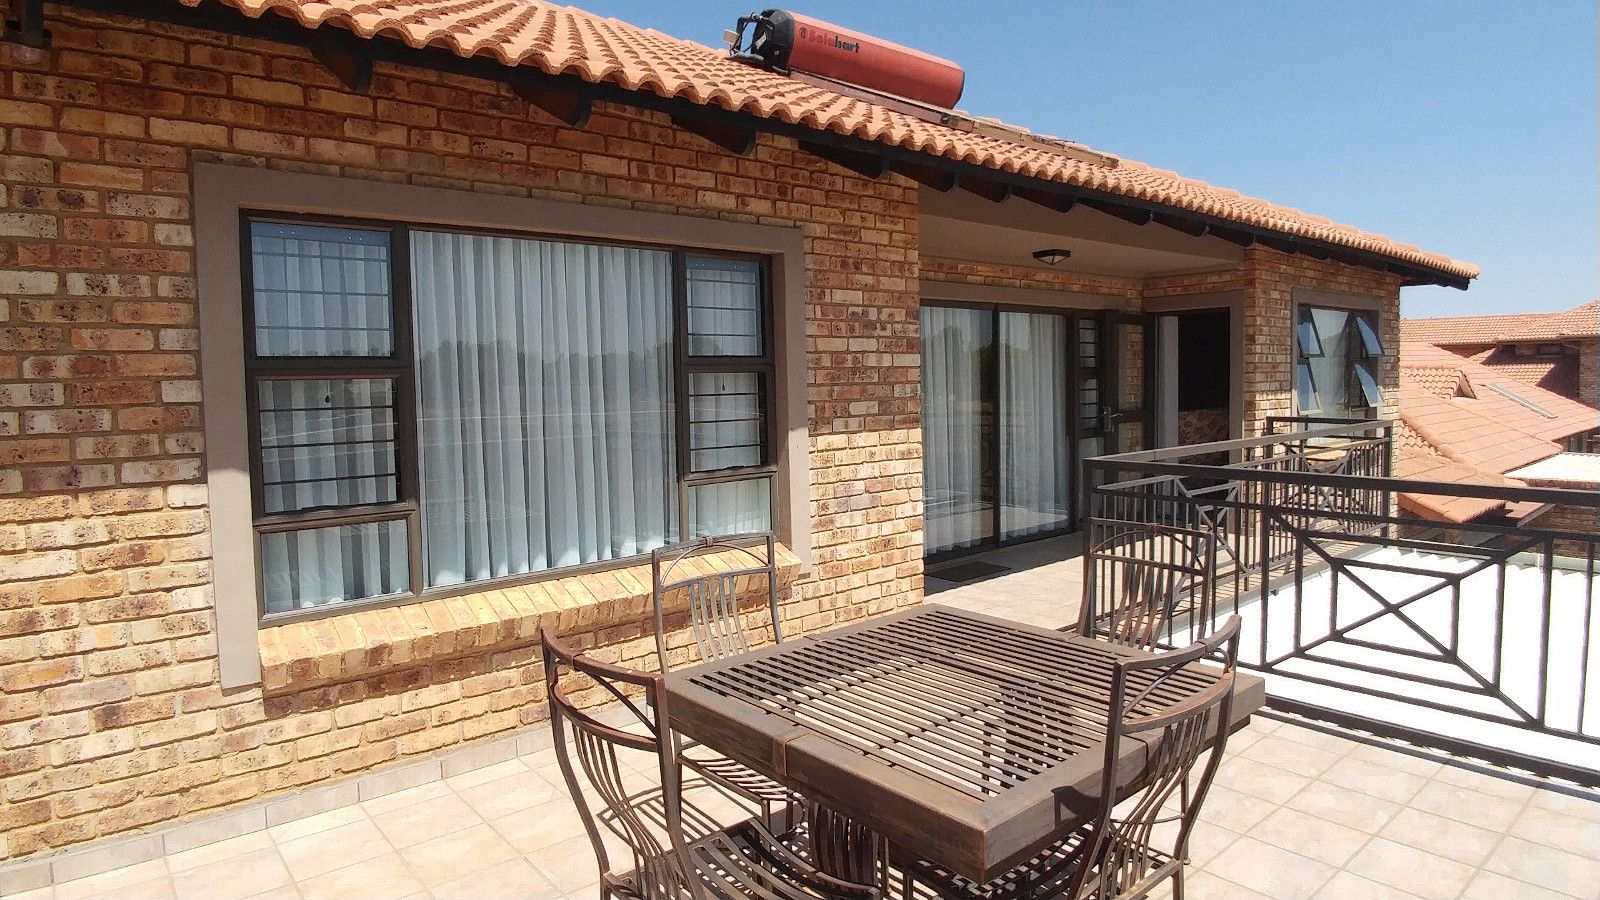 House in Potchefstroom - 23.jpeg